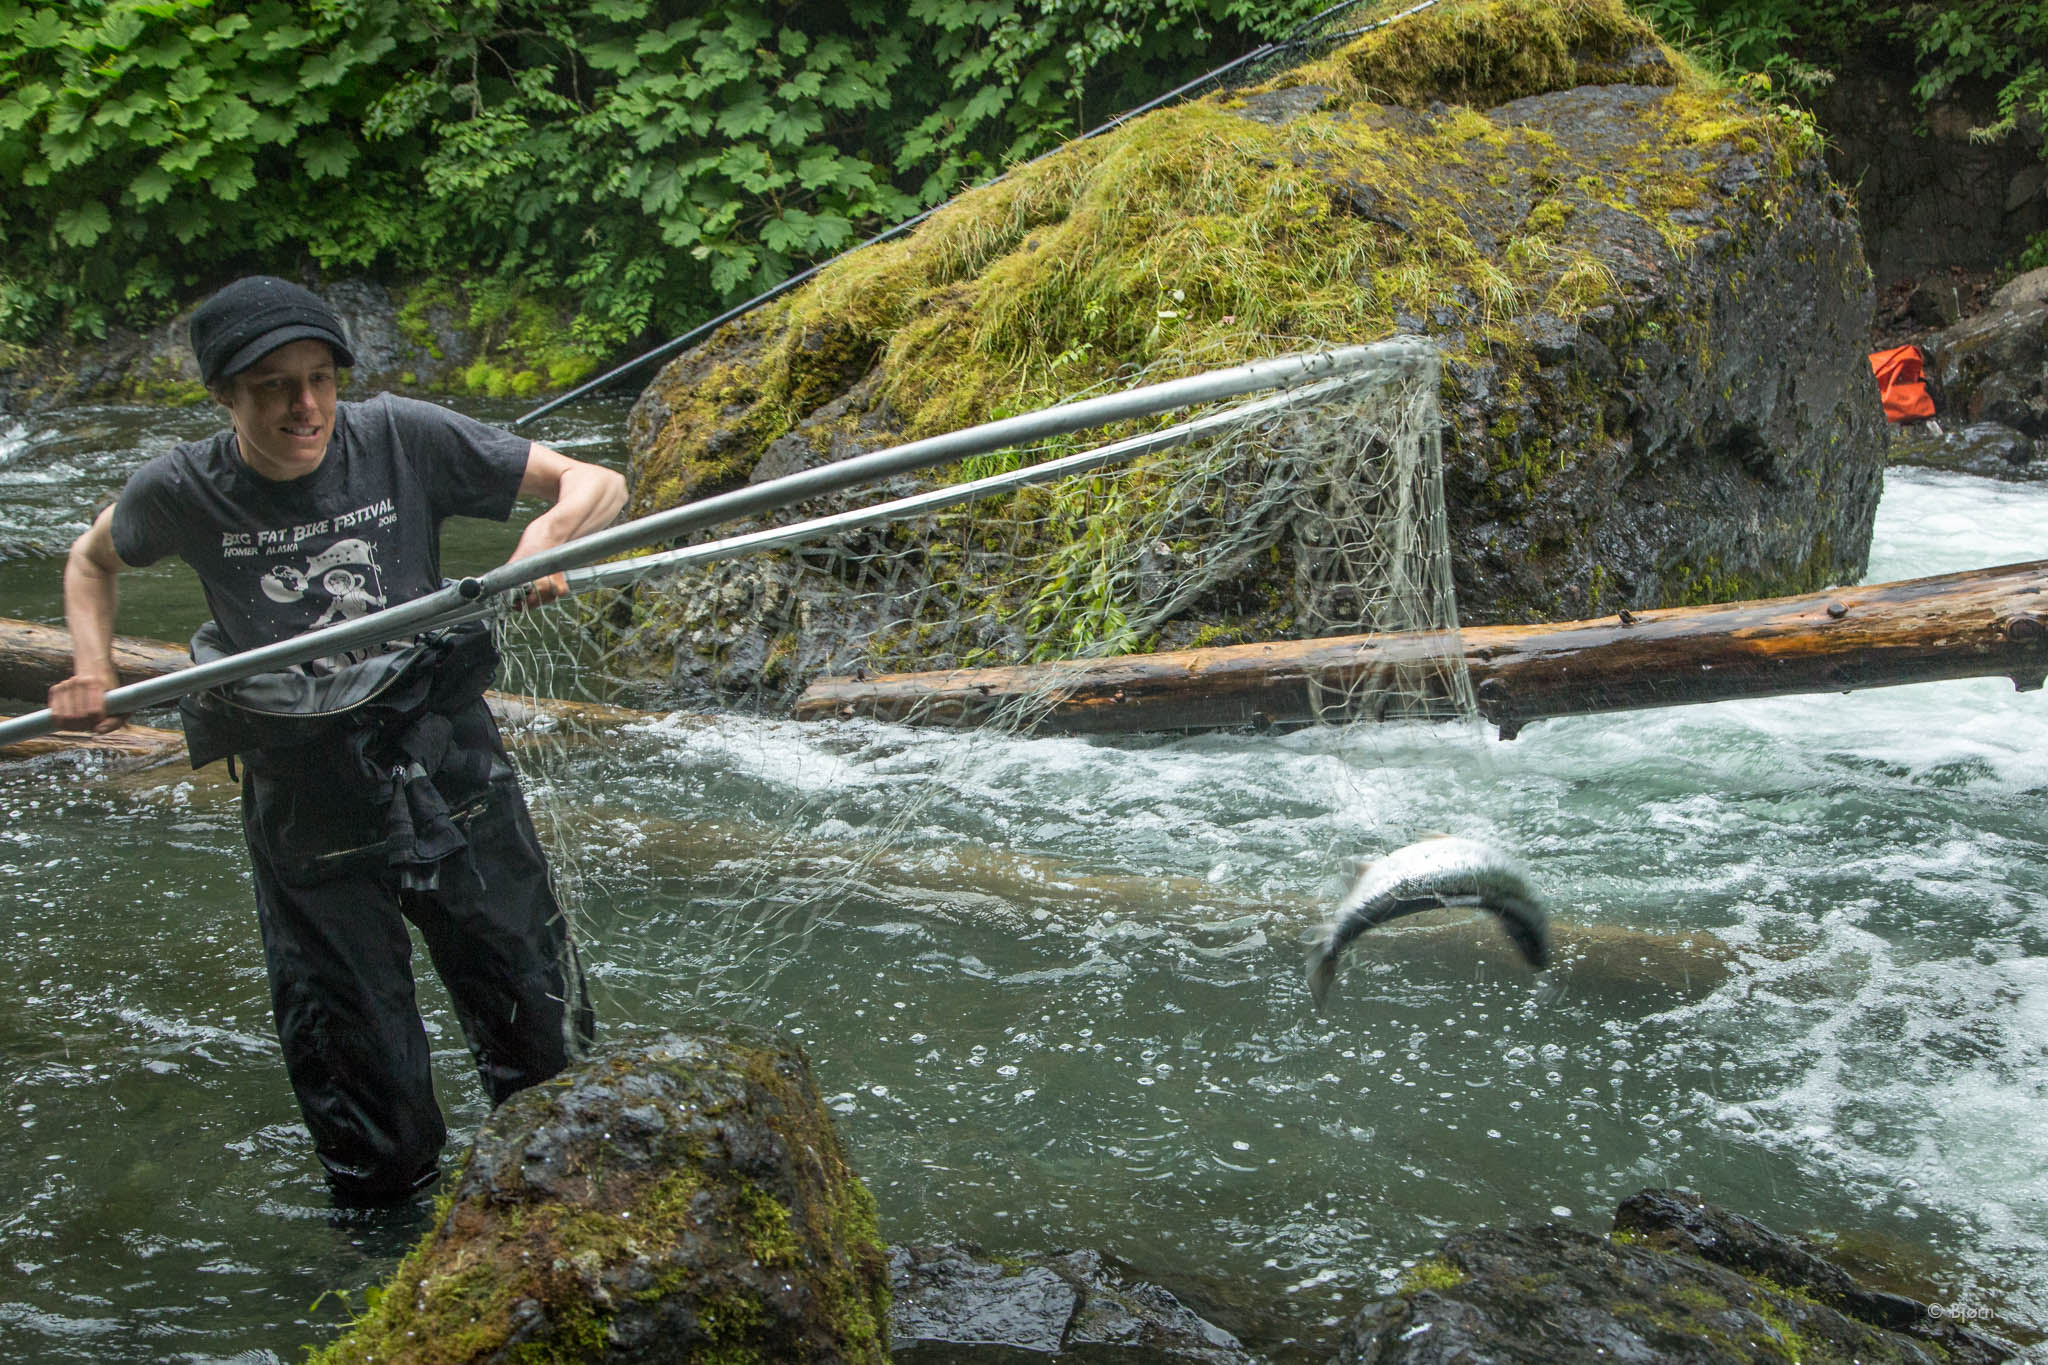  Kim dip-netting sockeye salmon - China Poot, Alaska.&nbsp;&nbsp; 